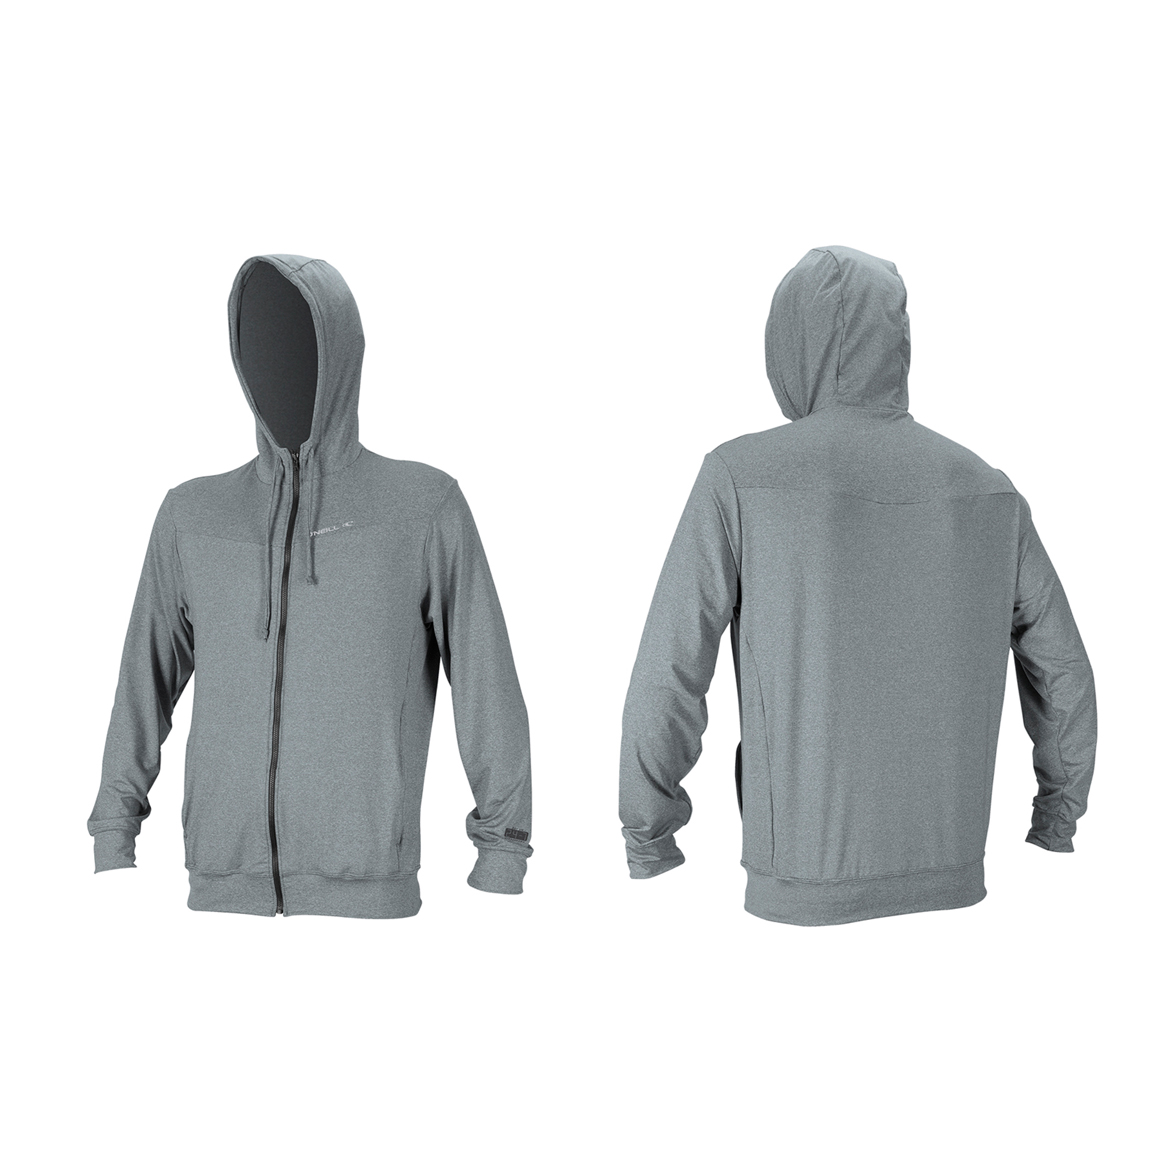 O'Neill 24-7 Tech Zip Hoodie jacket